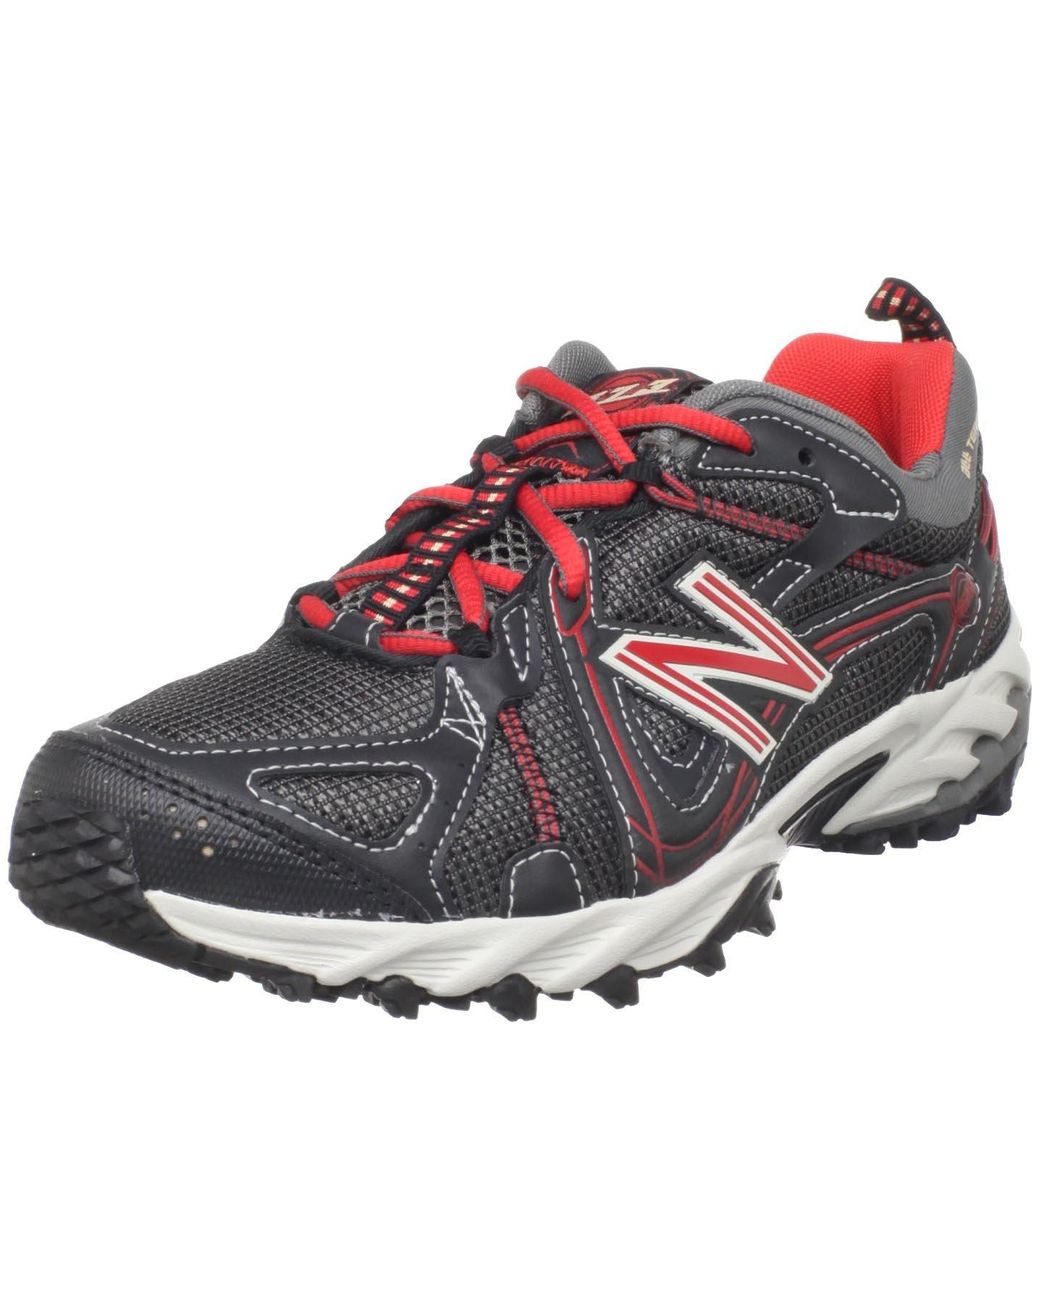 New Balance 573 V1 Trail Running Shoe | Lyst